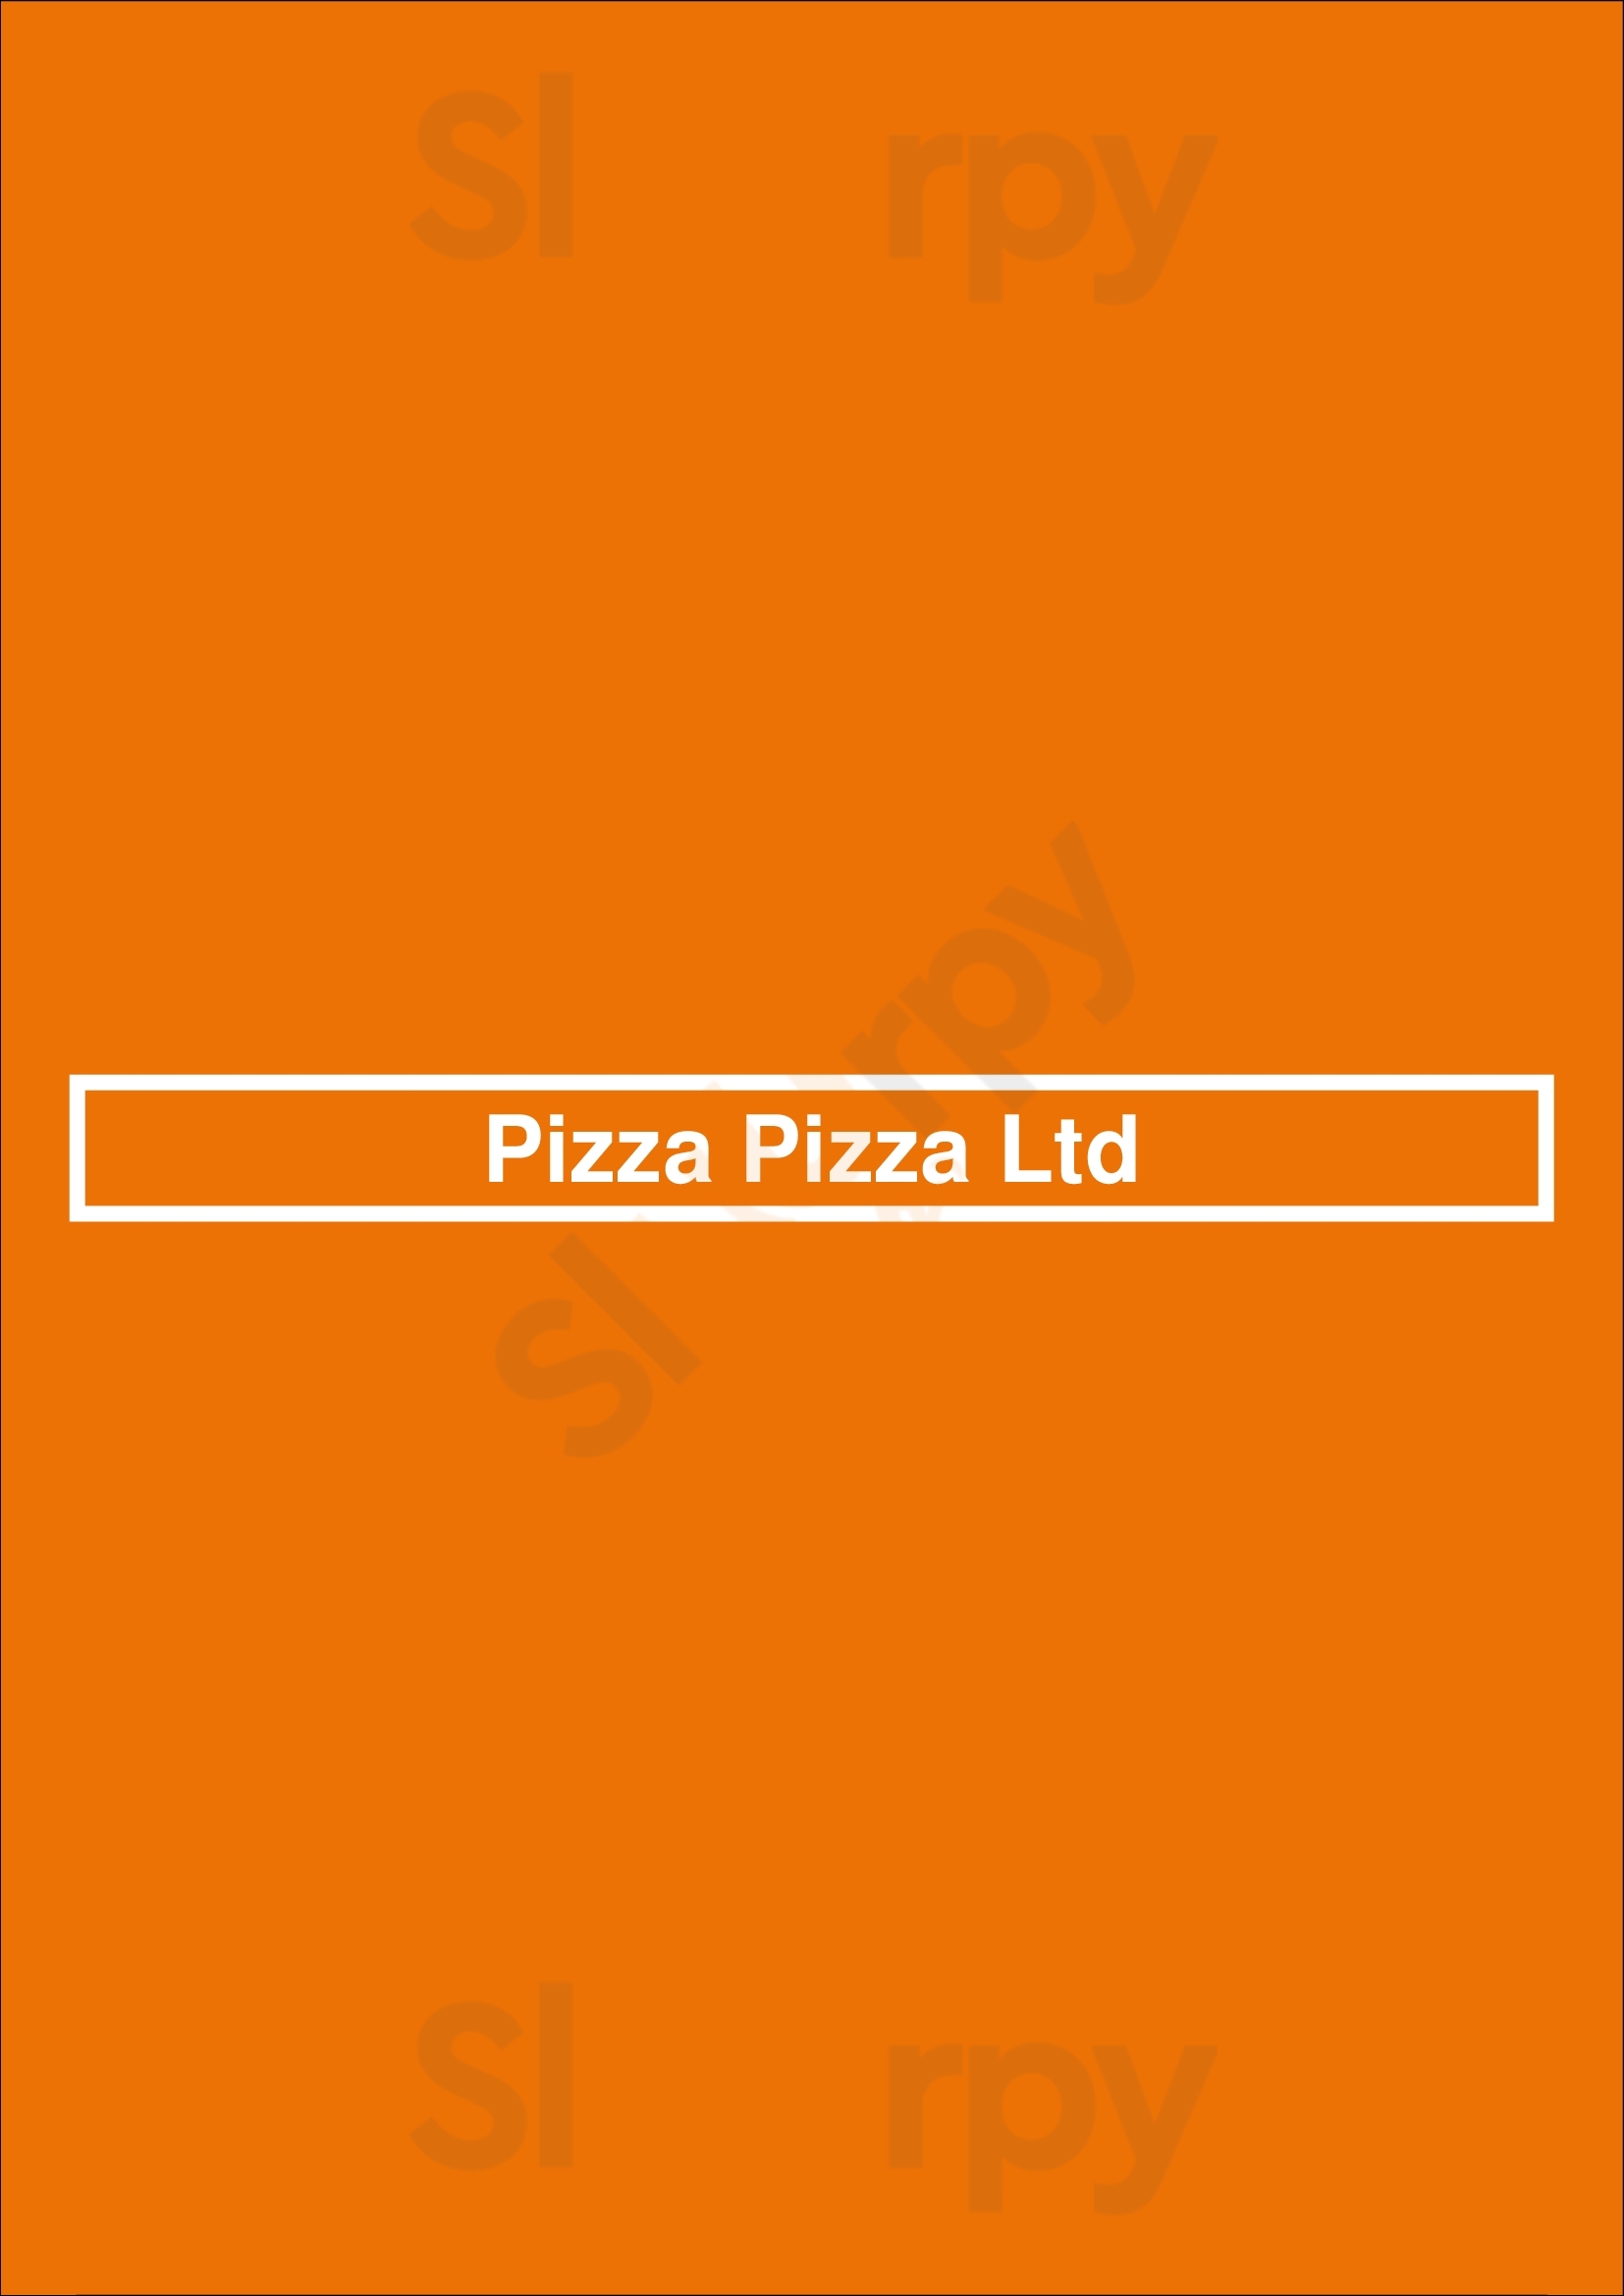 Pizza Pizza Ltd Kitchener Menu - 1